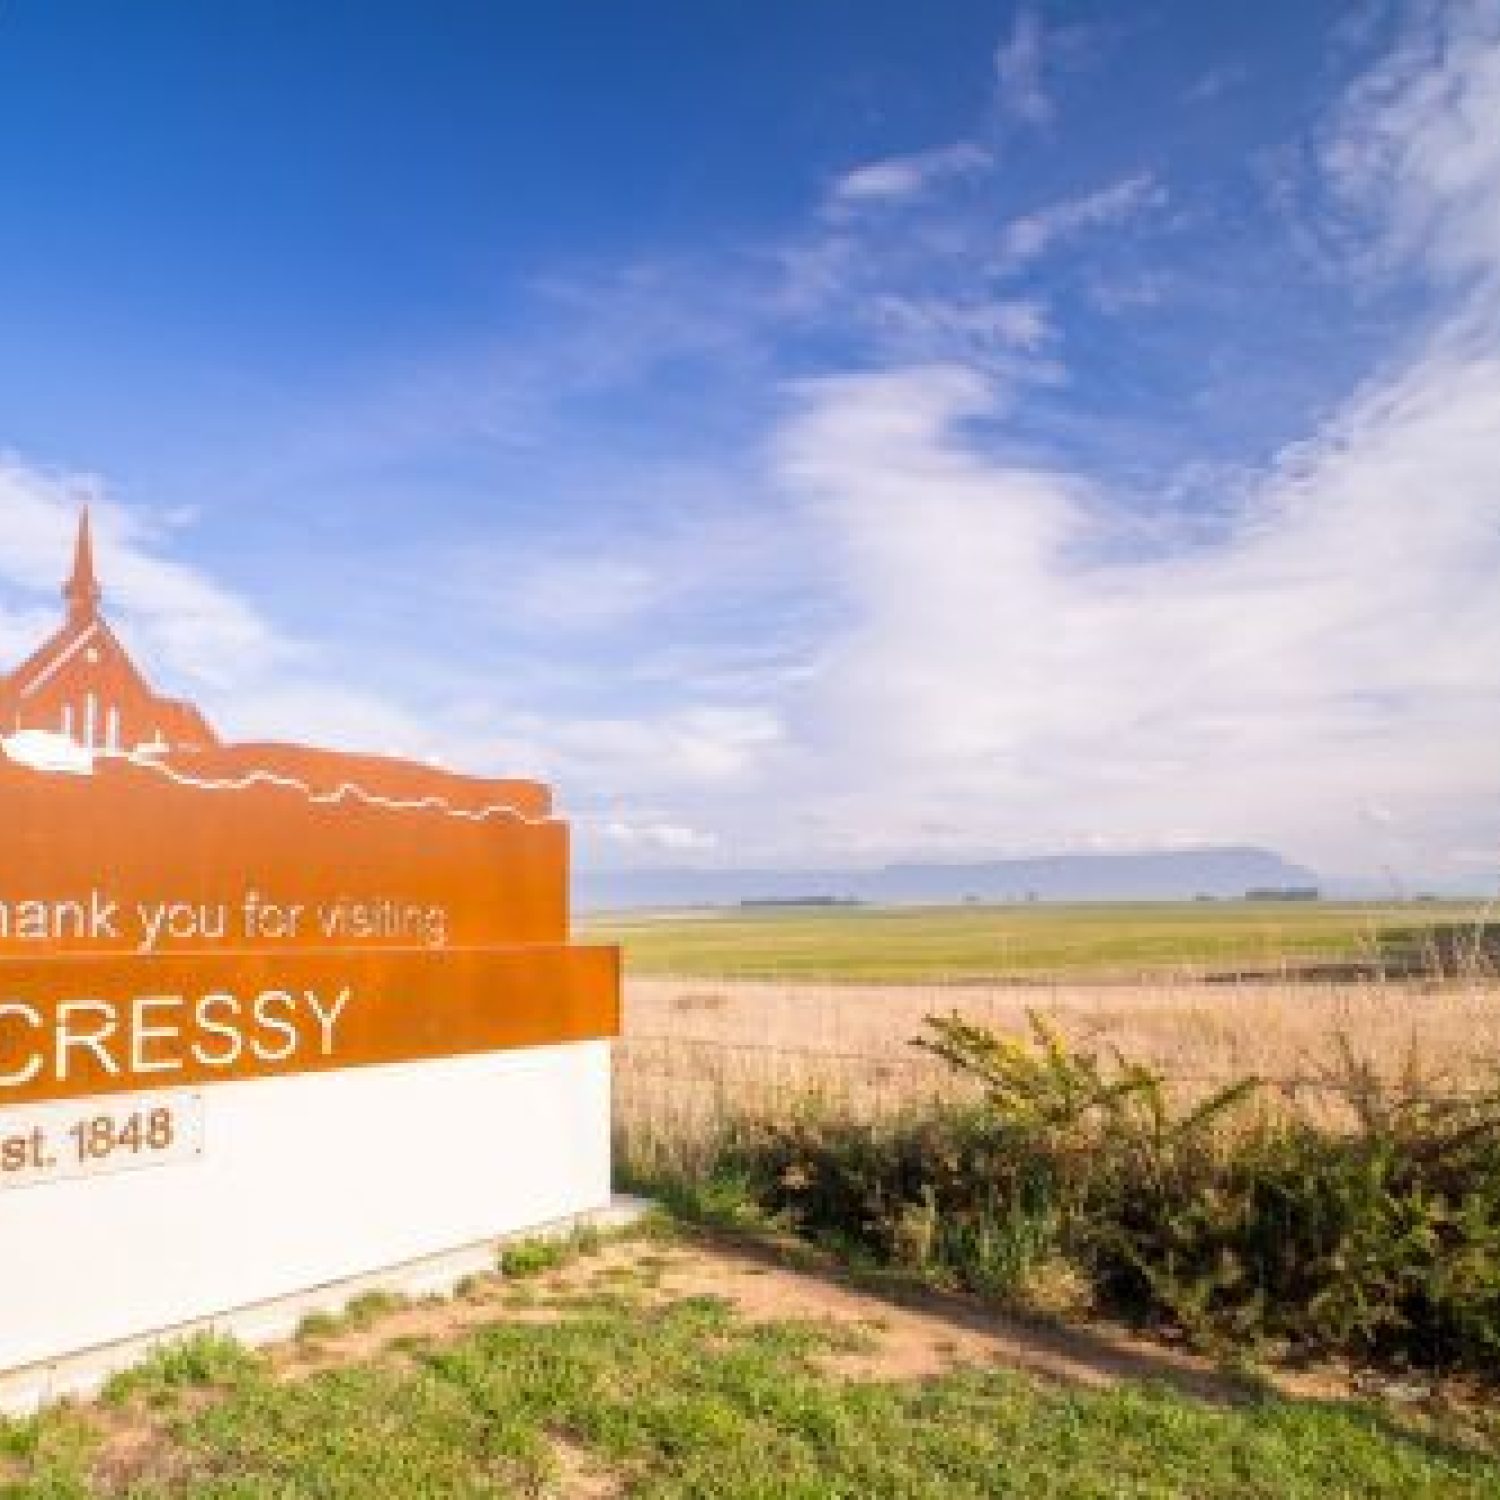 Cressy Entrance Statement